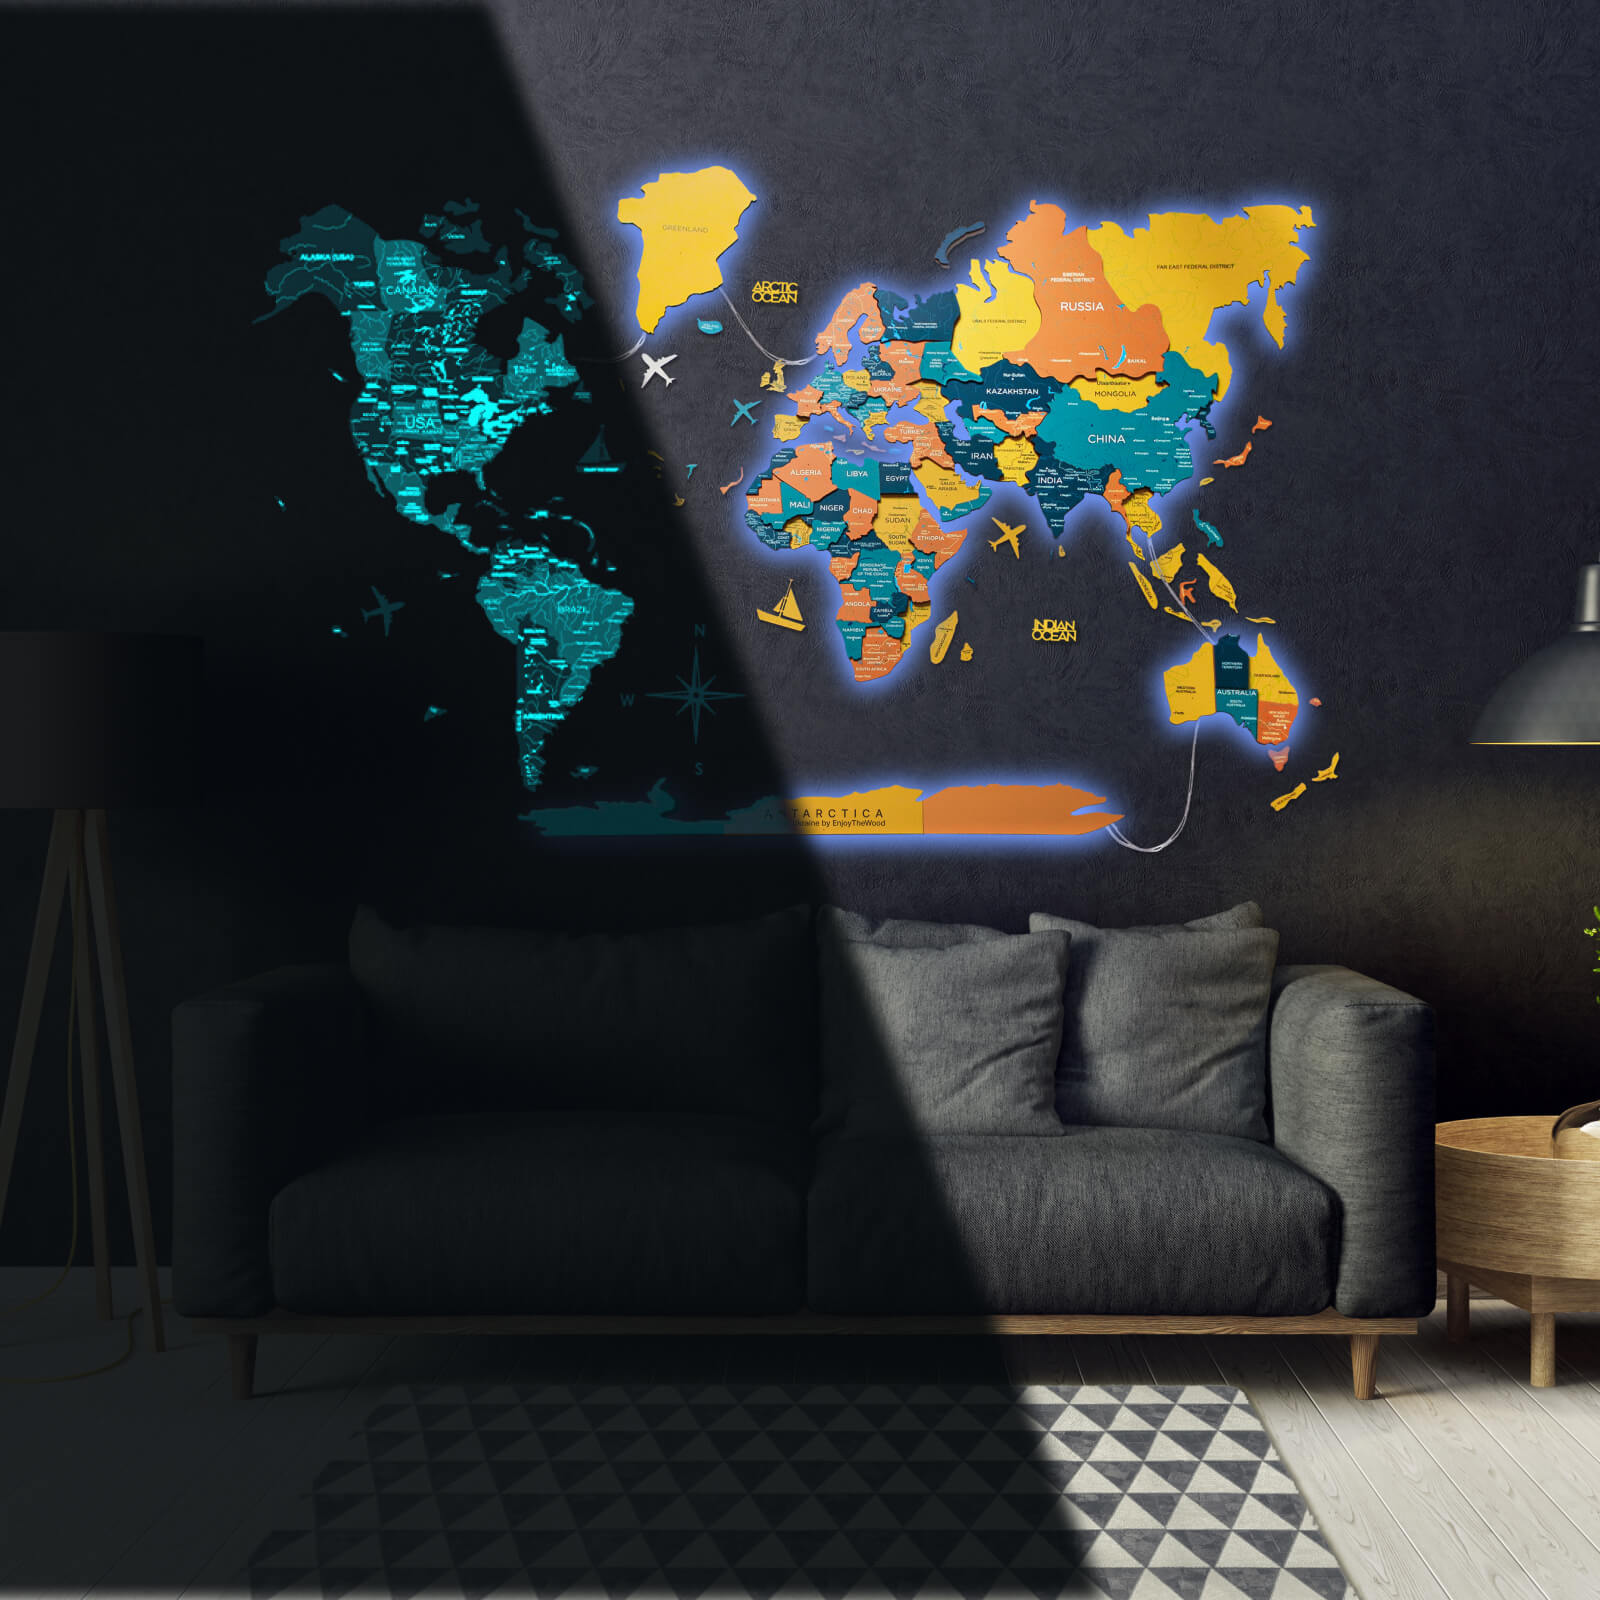 LED 3D / LUMINOSO Mapa mundial de madera 3.0 Indie